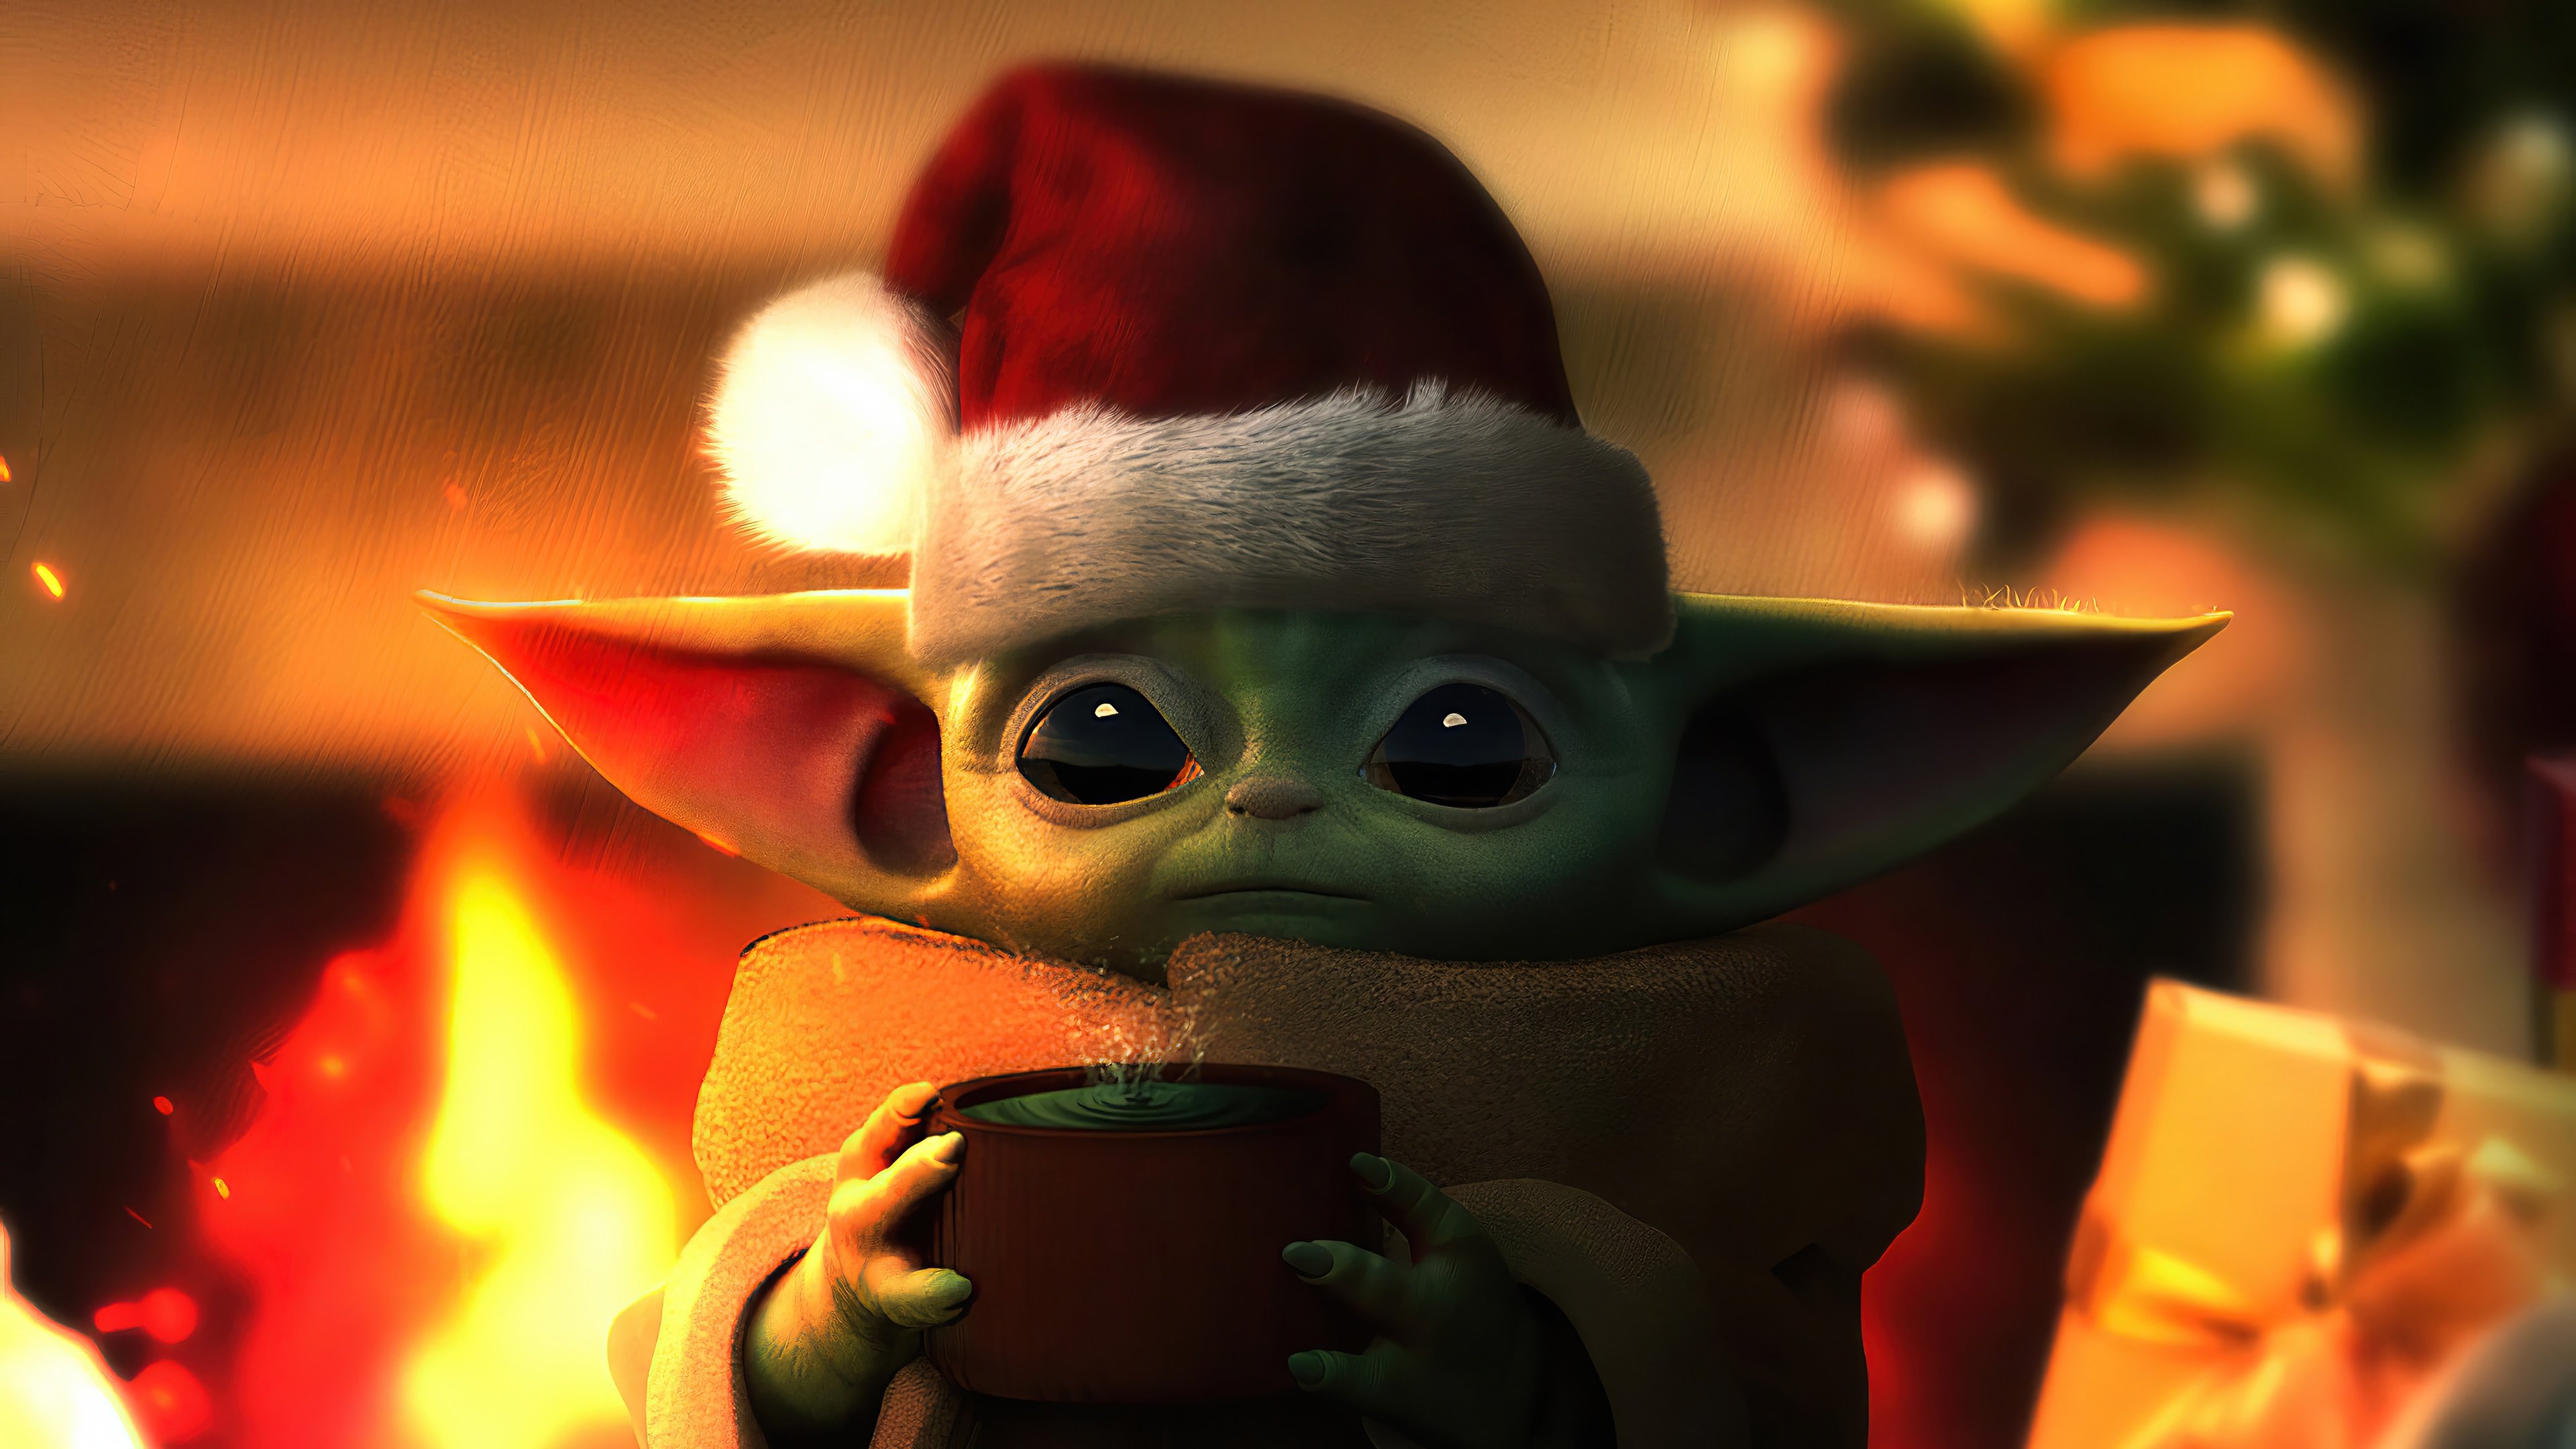 Fondos de pantalla Christmas Baby Yoda Star Wars